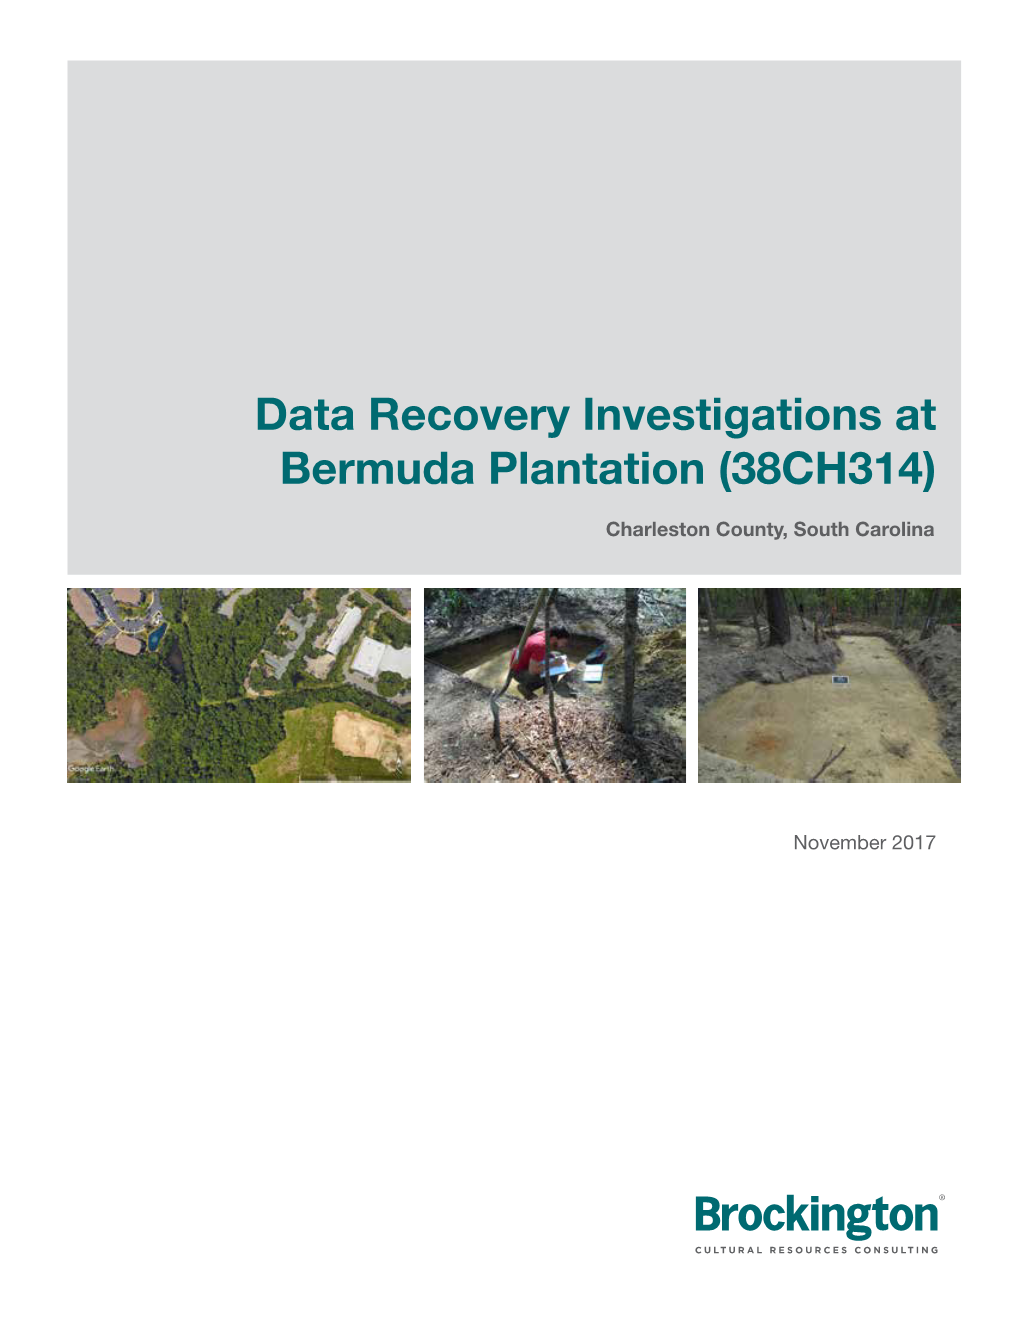 Data Recovery Investigations at Bermuda Plantation (38CH314)